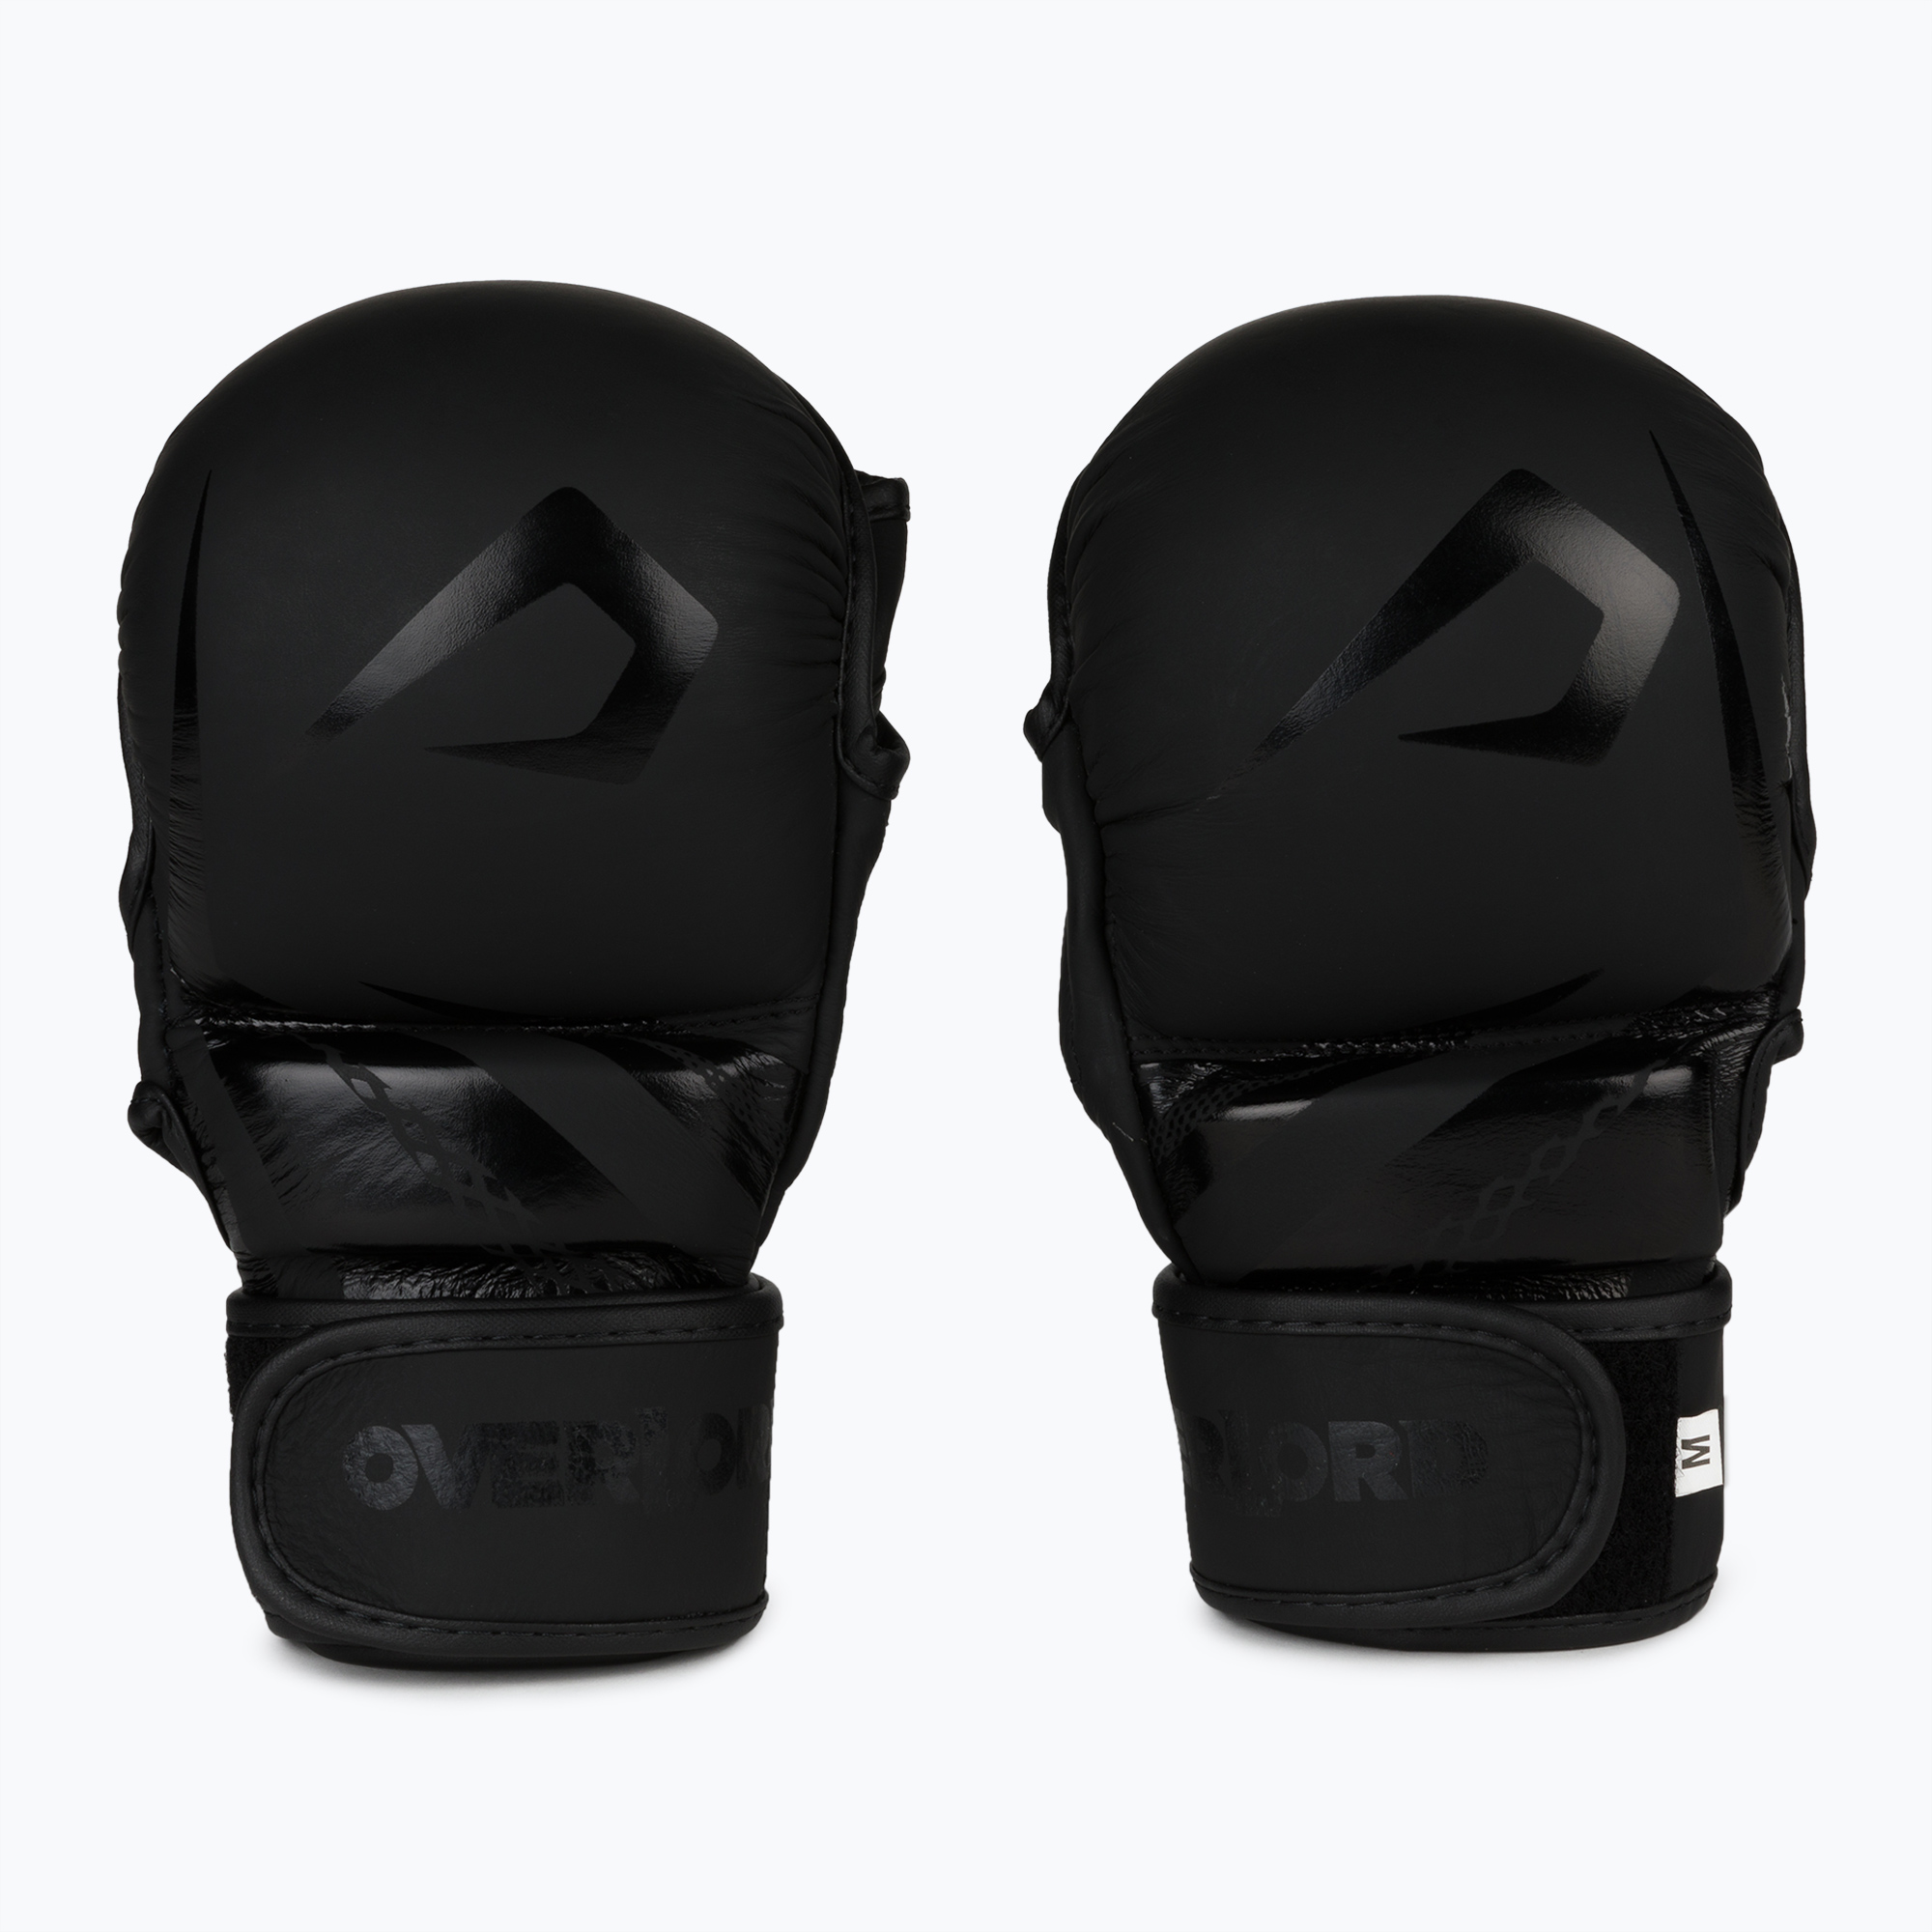 Overlord Sparring MMA grapplingové rukavice čierne 101003-BK/S